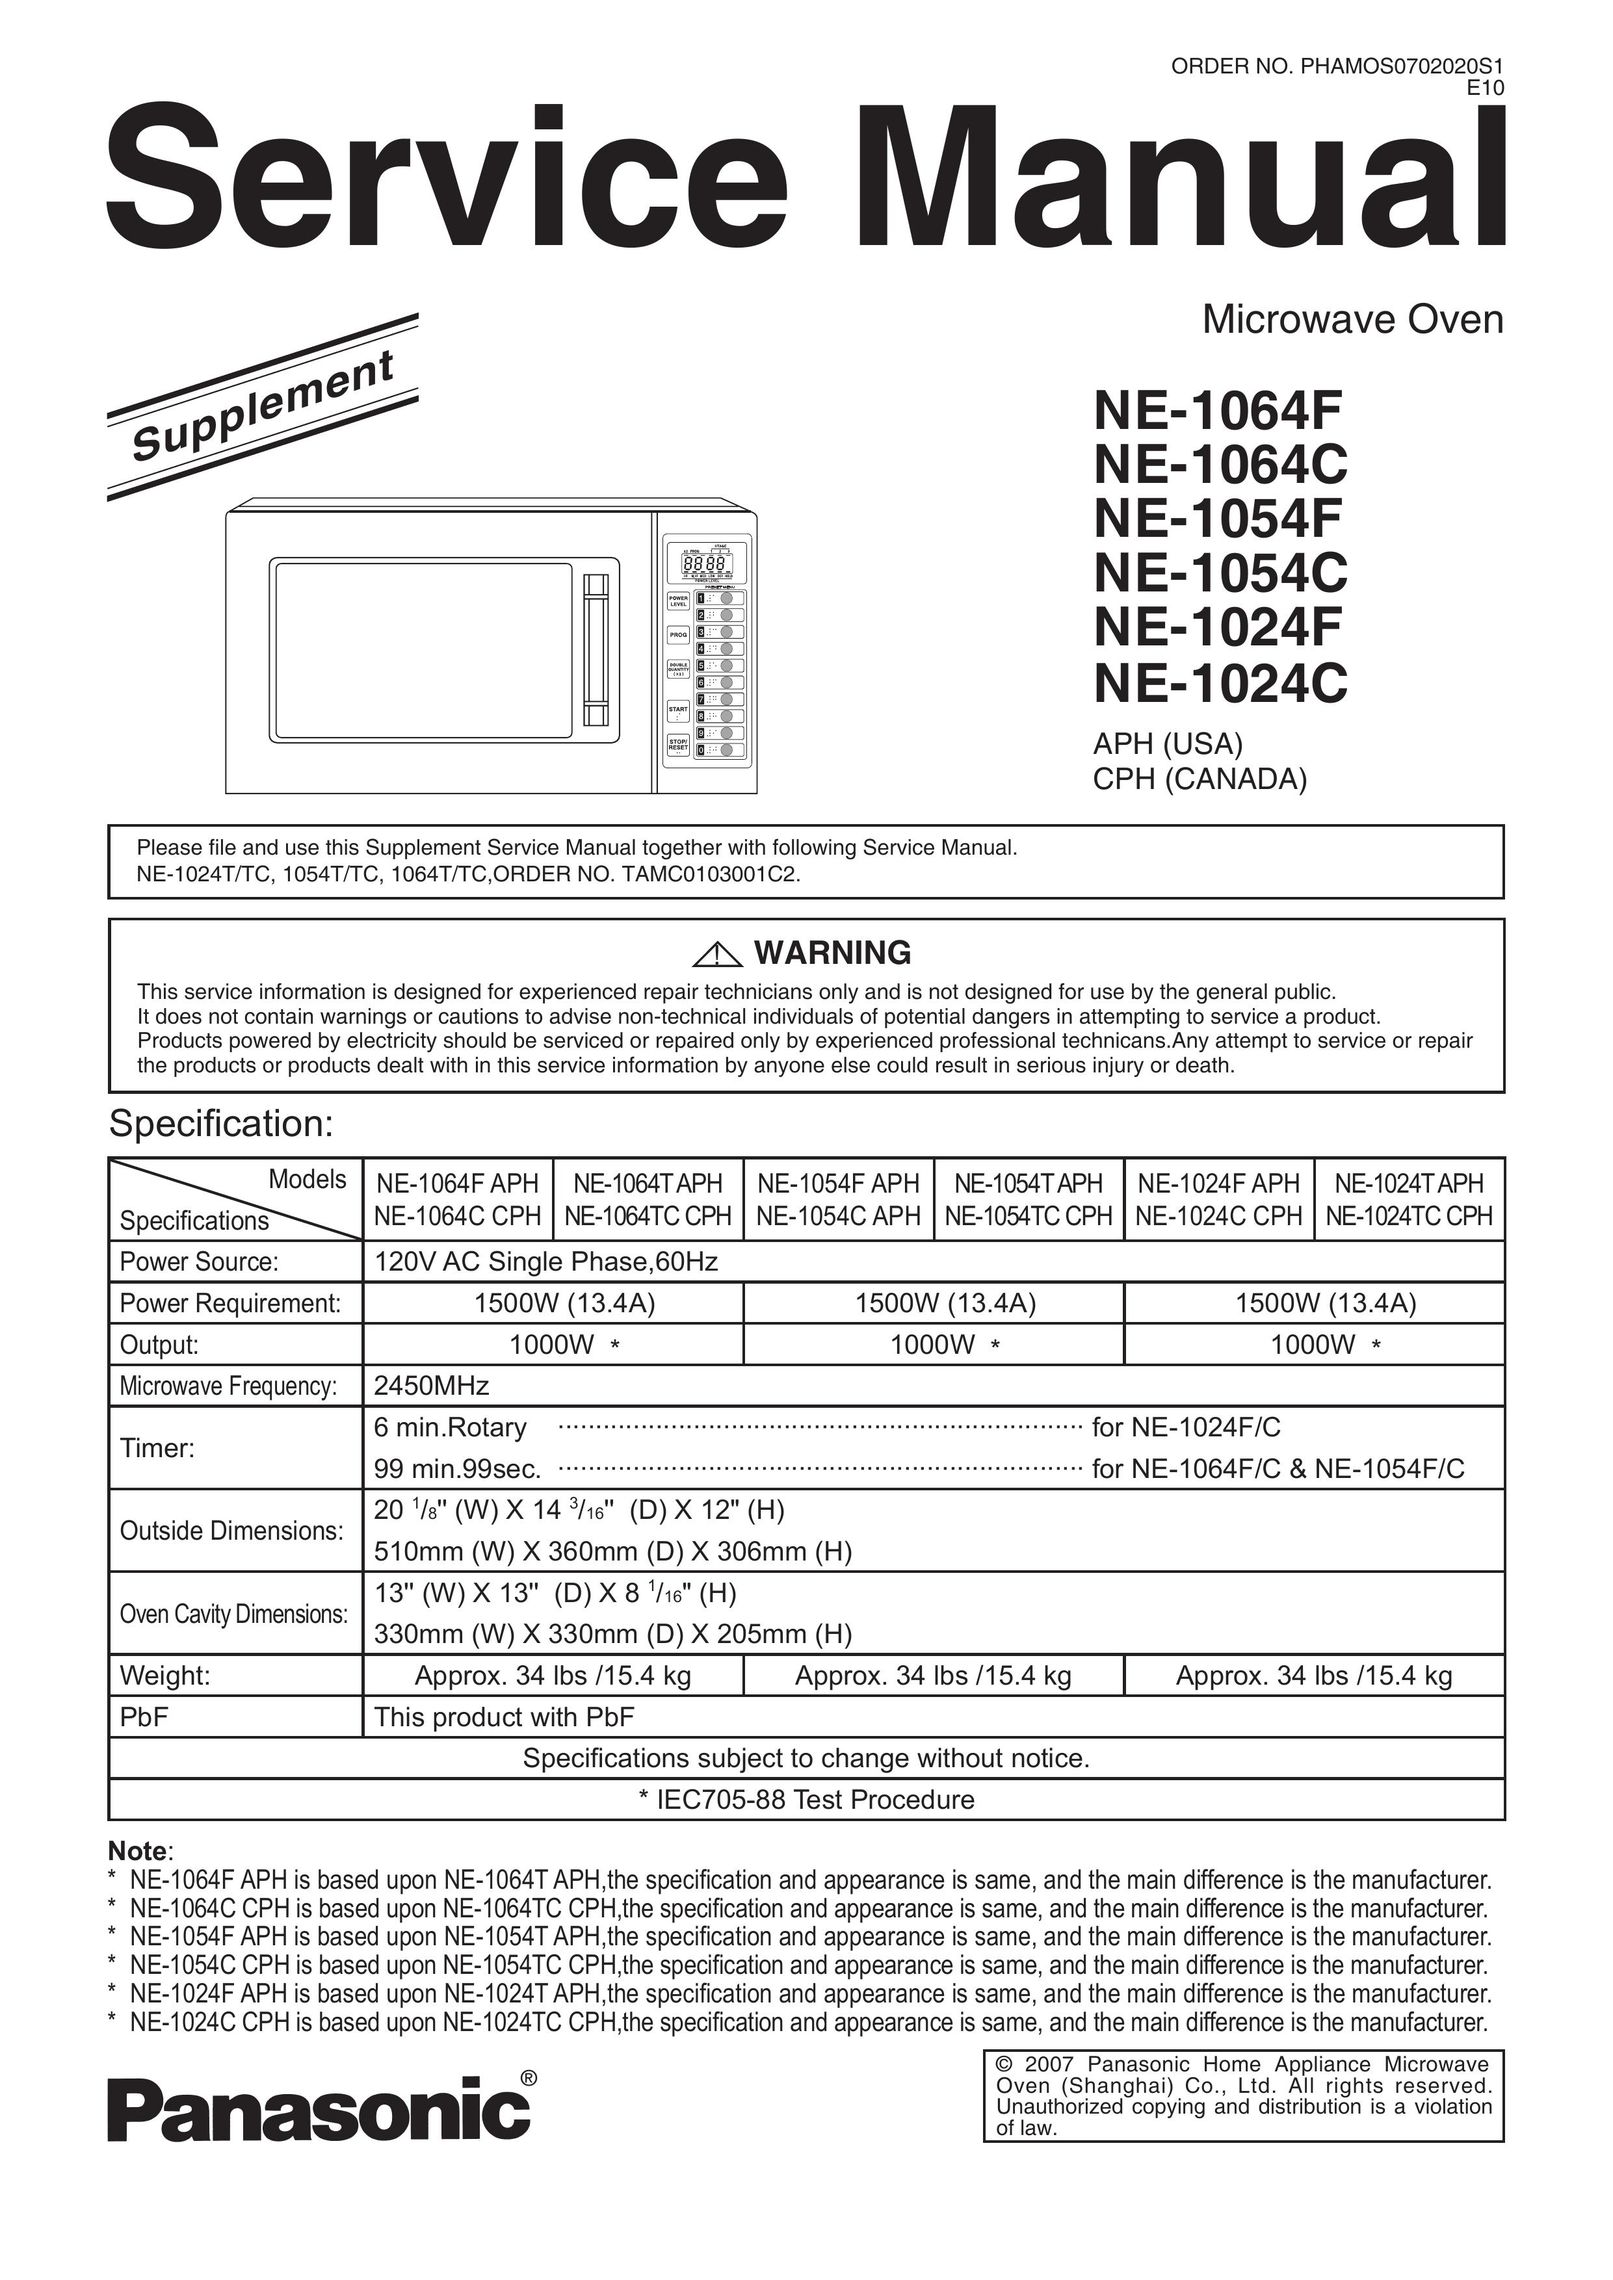 Panasonic NE-1024C Microwave Oven User Manual